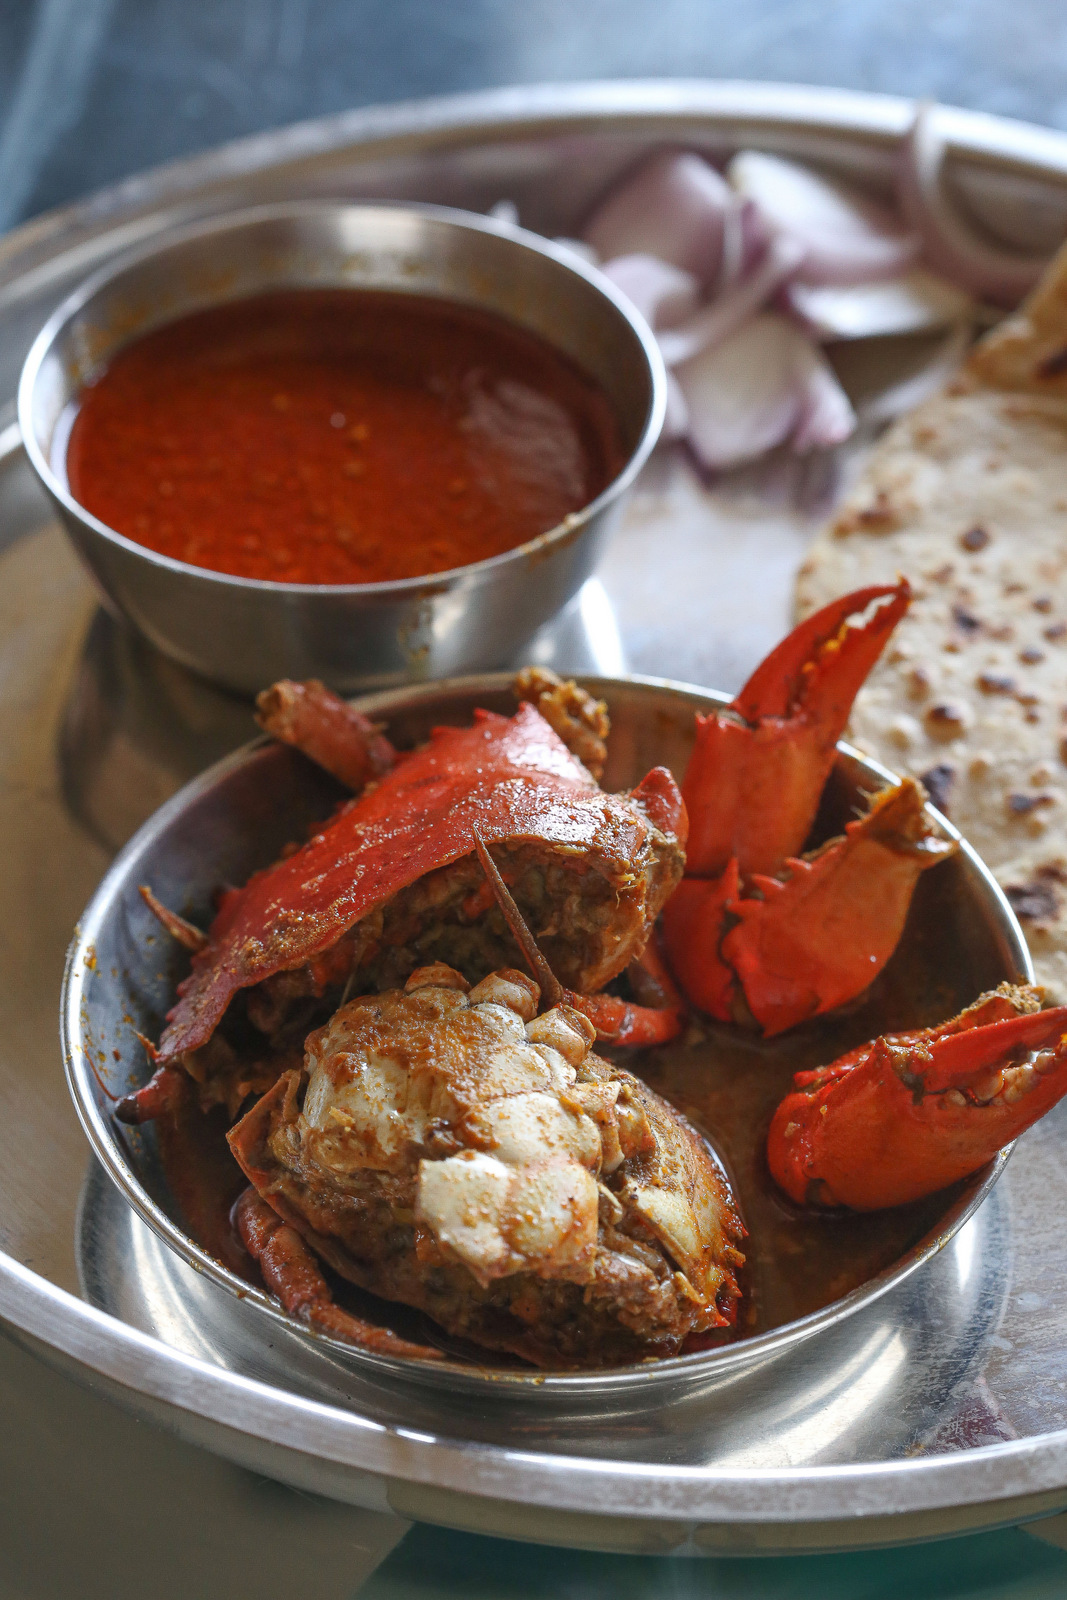 malavani recipes, crab curry, khekda rassa, indian recipes, food photography, seafood recipes, surmai fish fry, fish fry, indian non vegetarian recipes, traditional indian recipes